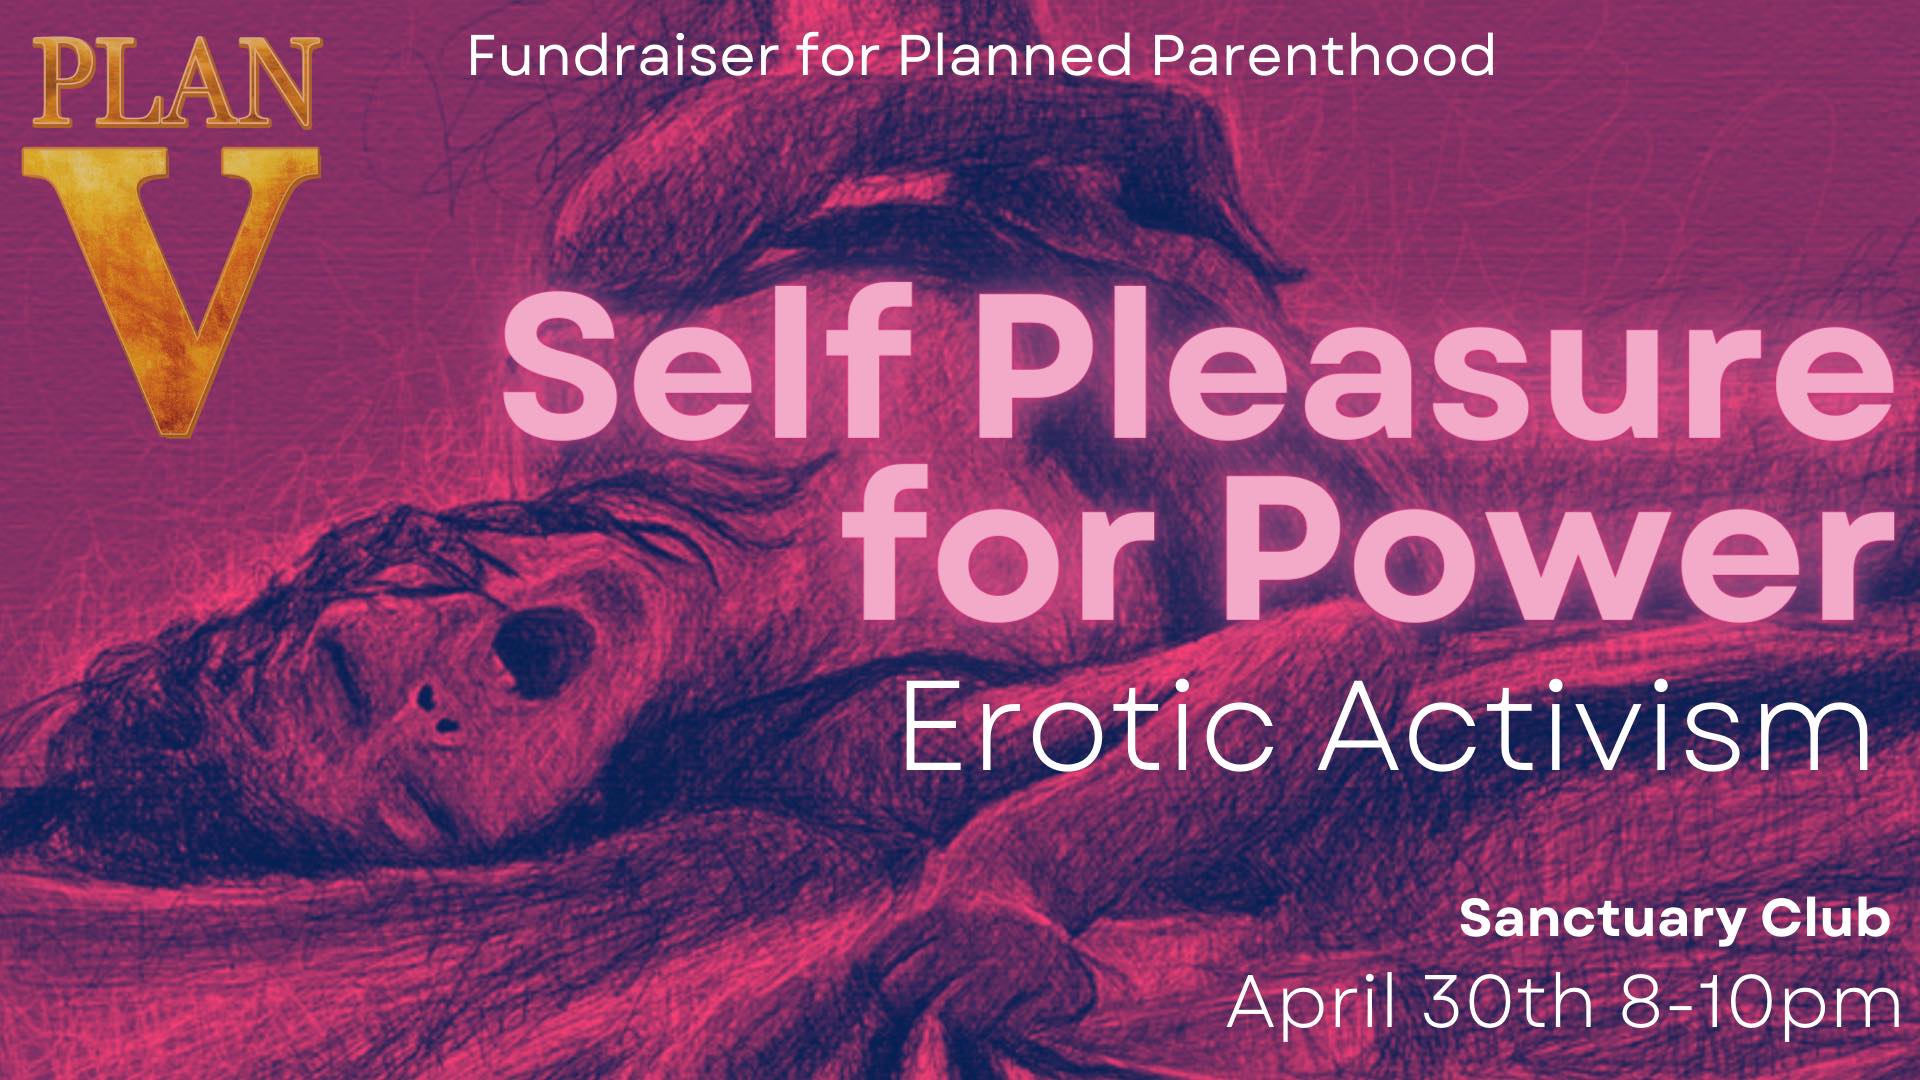 Self Pleasure for Planned Parenthood! - Sanctuary Club